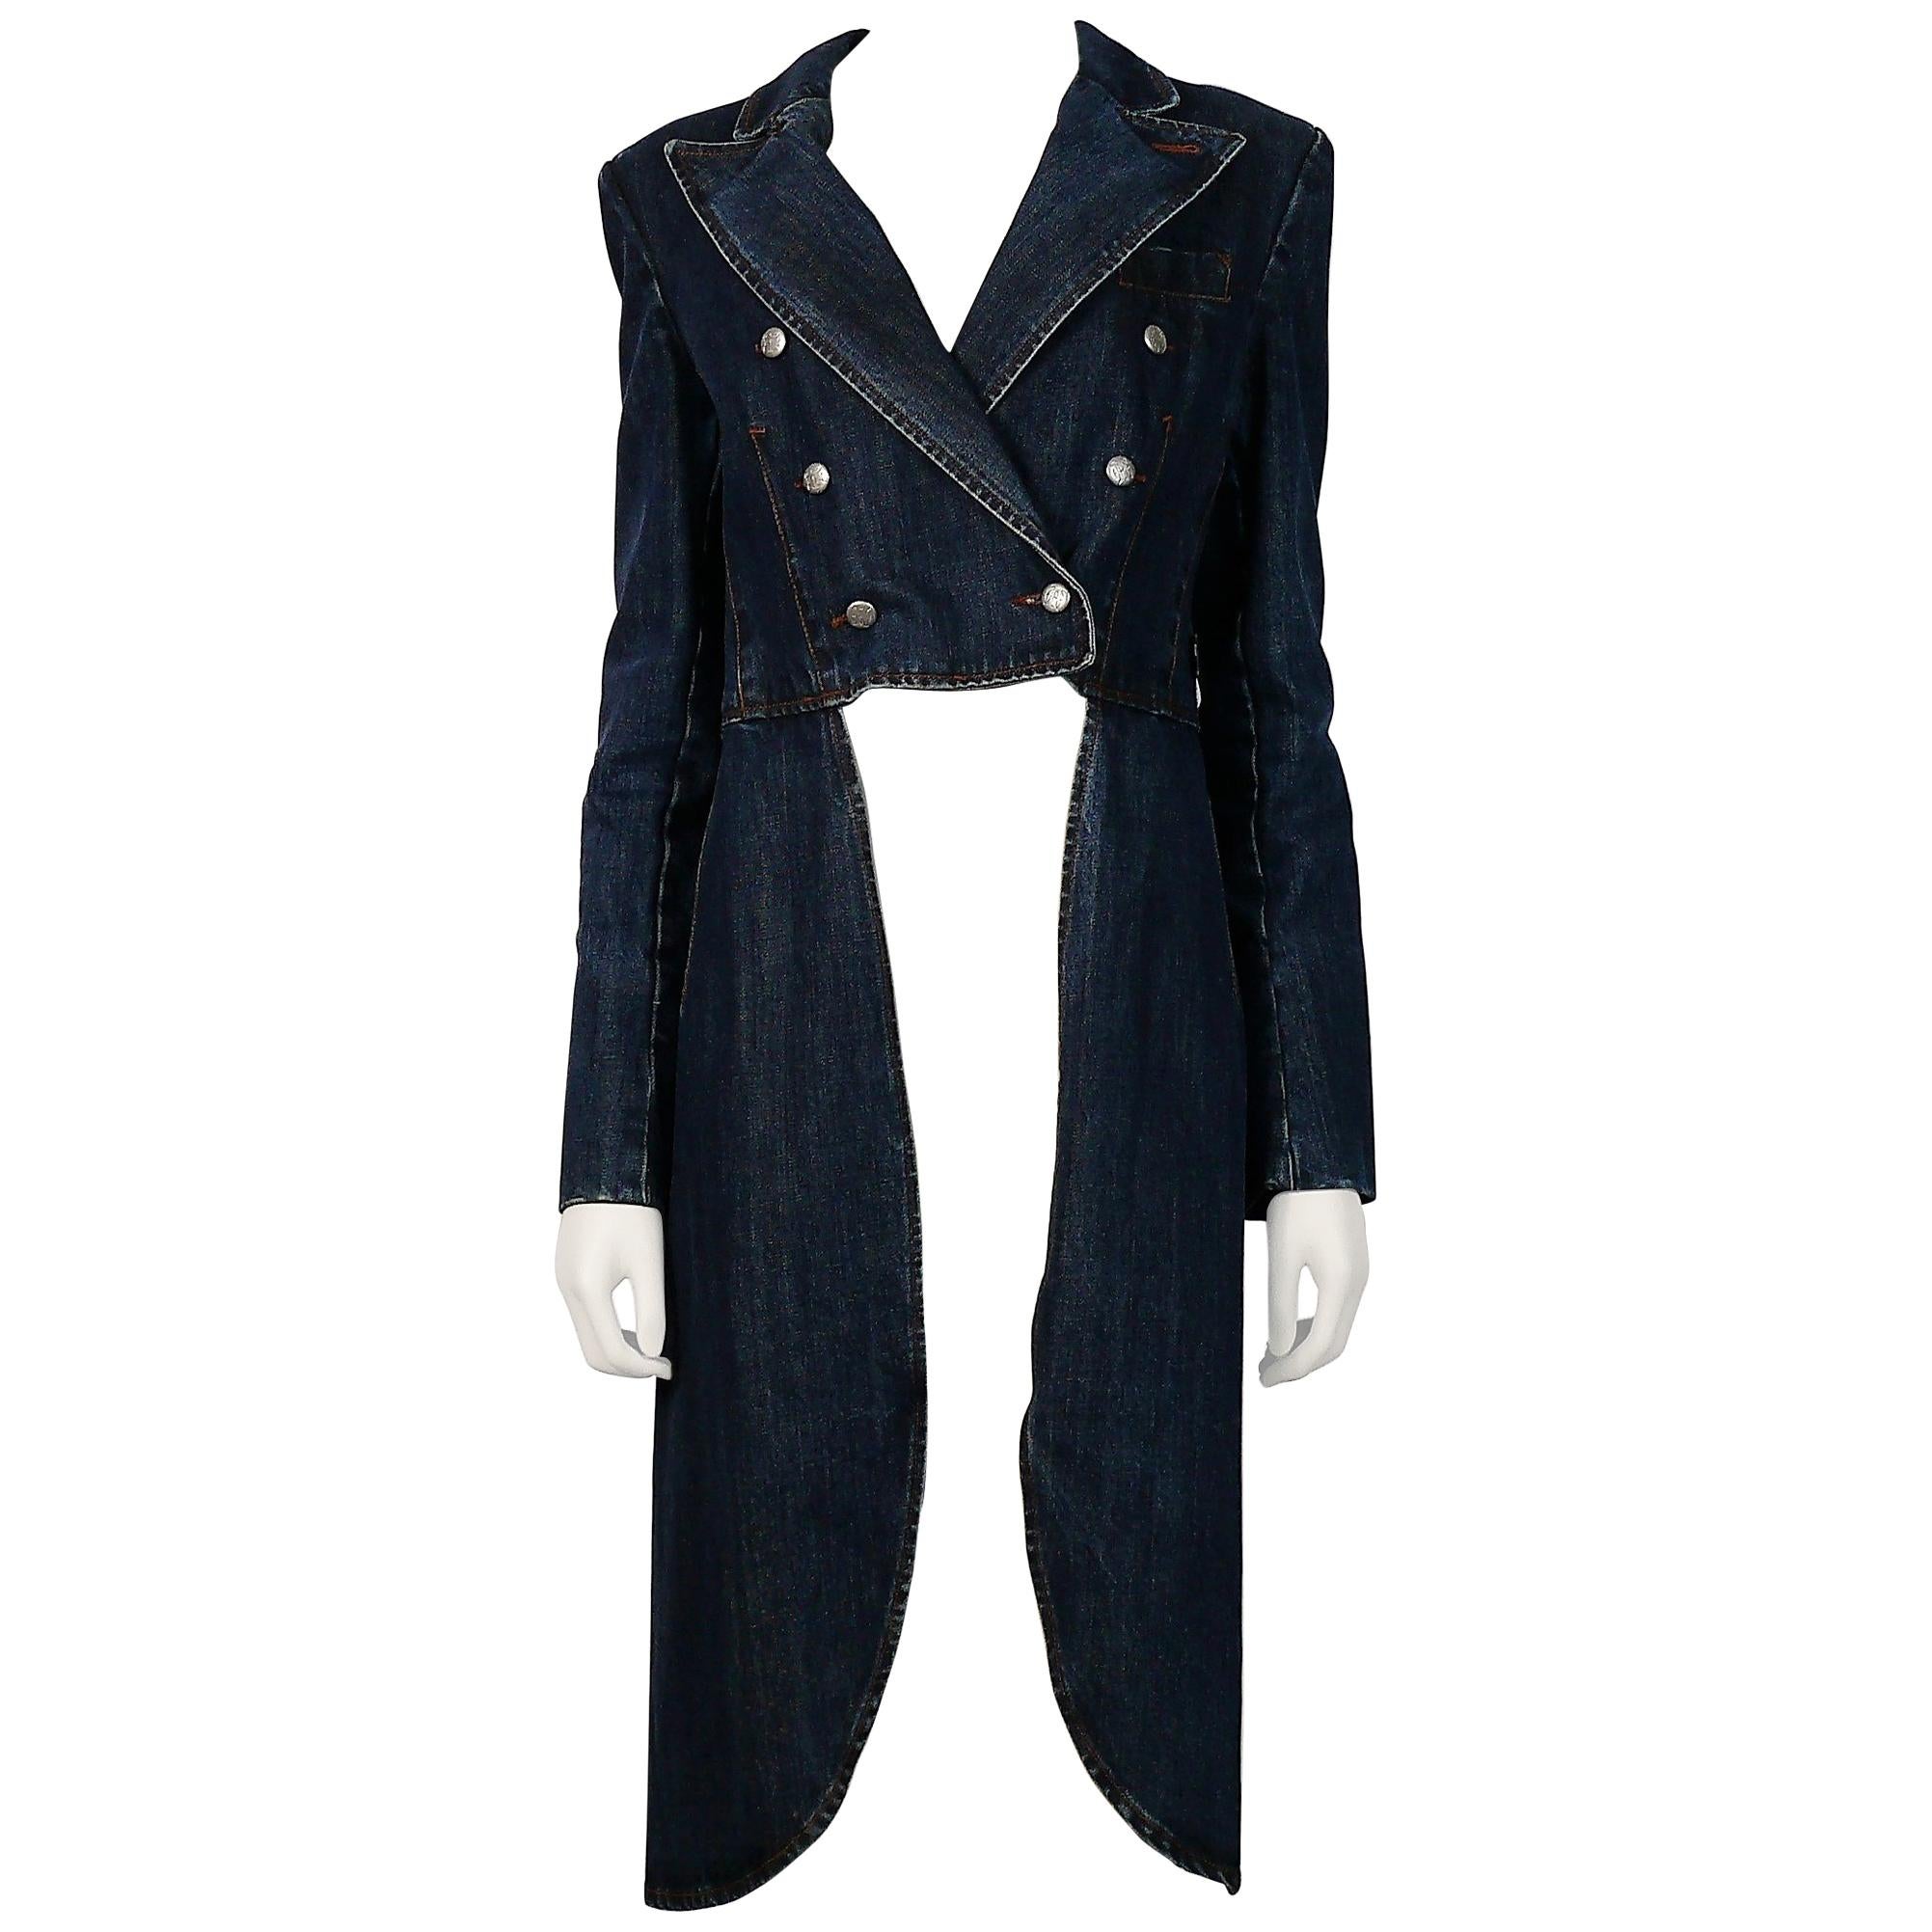 Jean Paul Gaultier Vintage Denim Tailcoat Jacket US Size 10